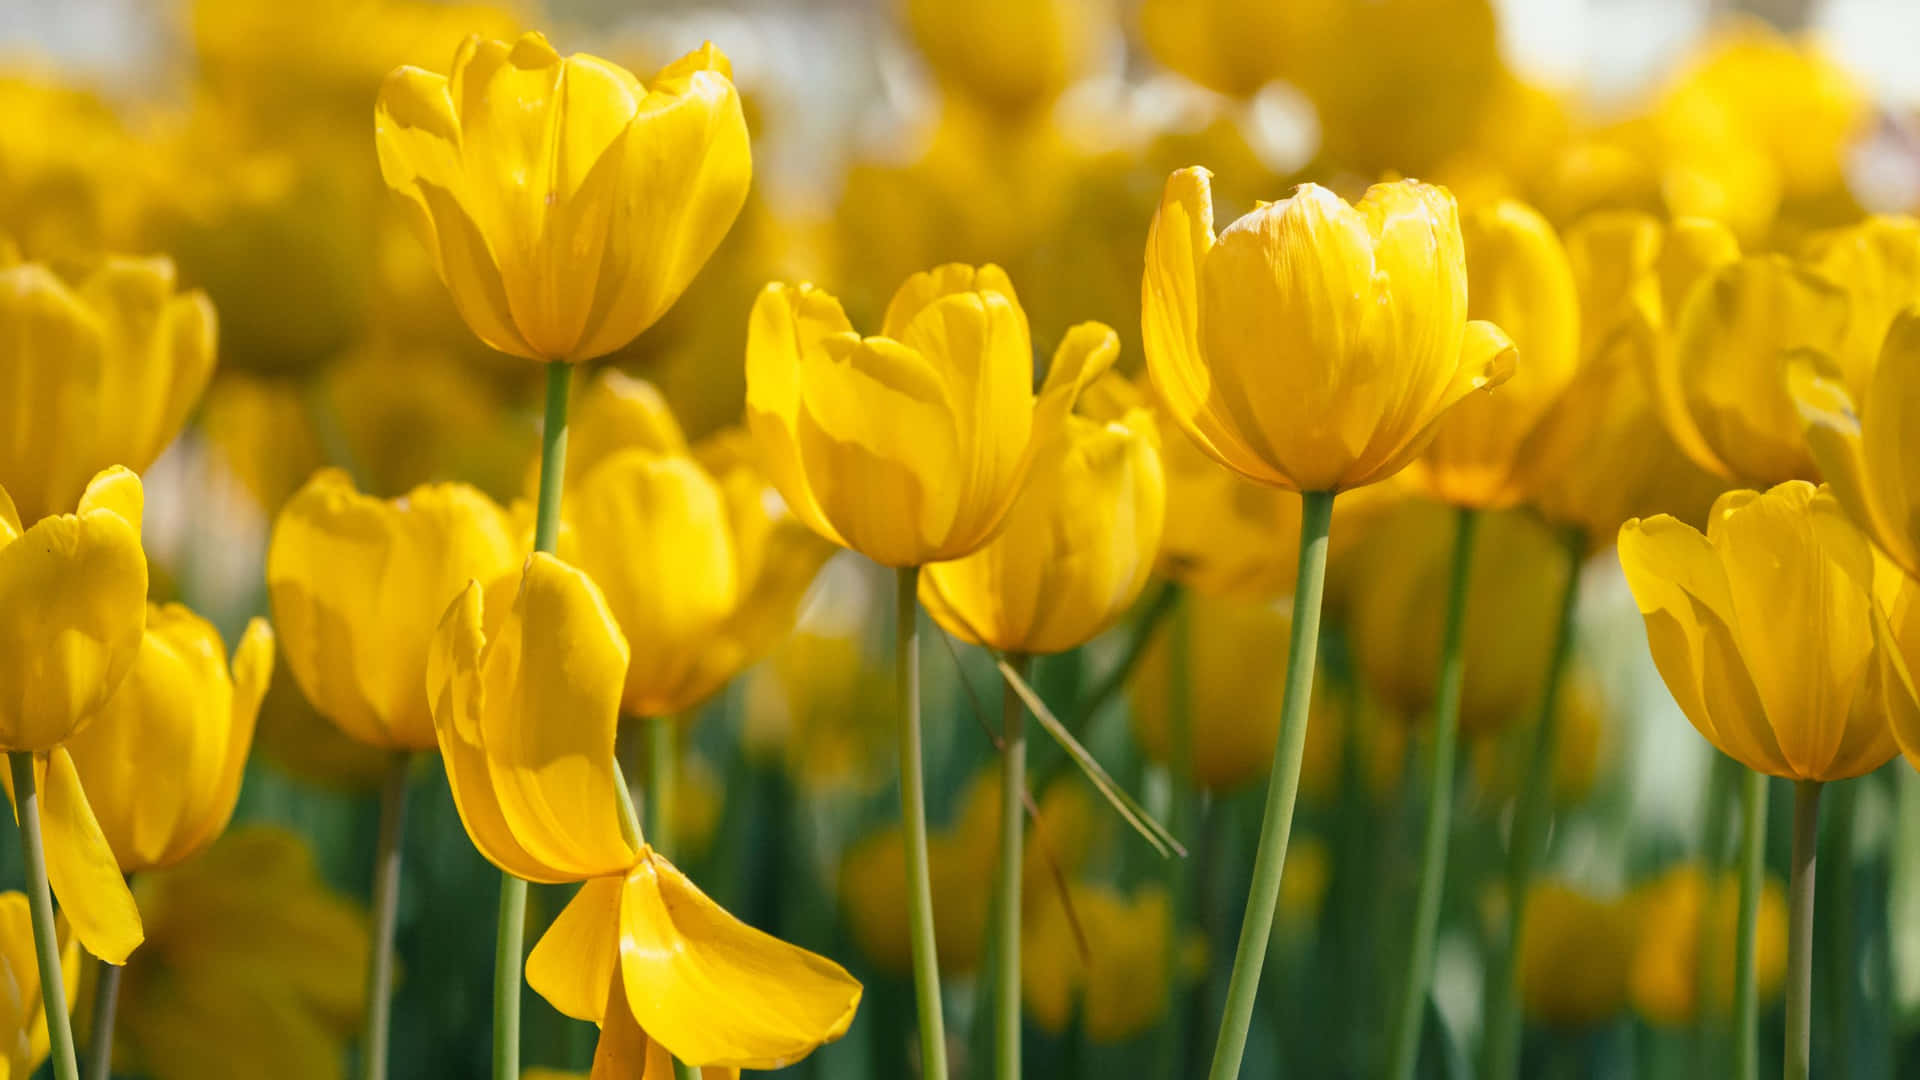 Yellow Aesthetic Flower Desktop Tulips In A Garden Wallpaper